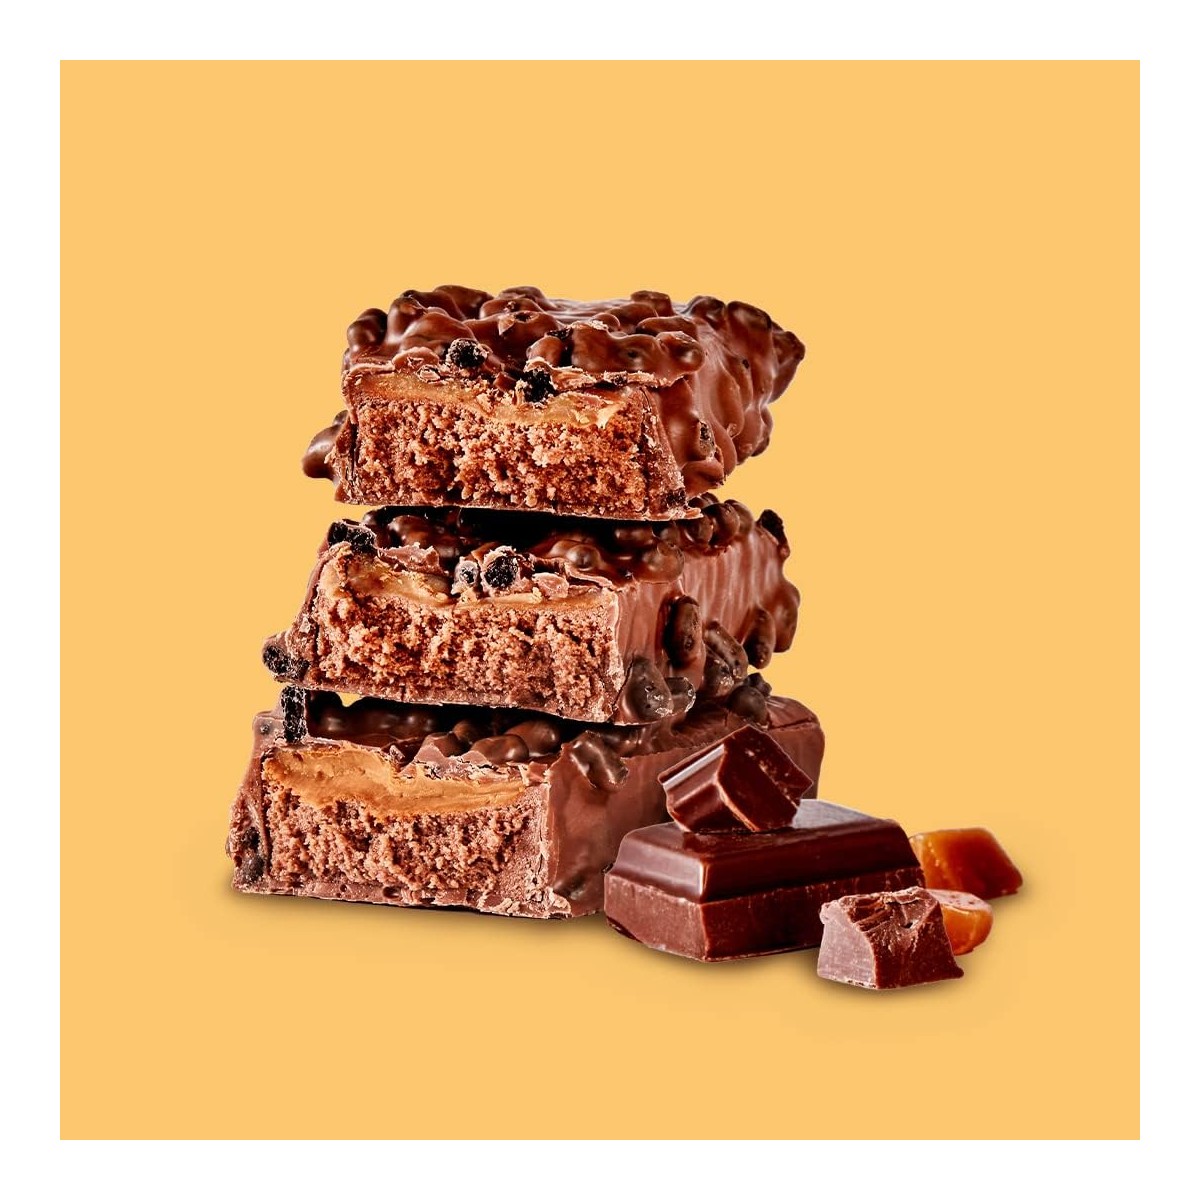 YFood hautes protéines barre caramel salé & chocolat 60 g à petit prix